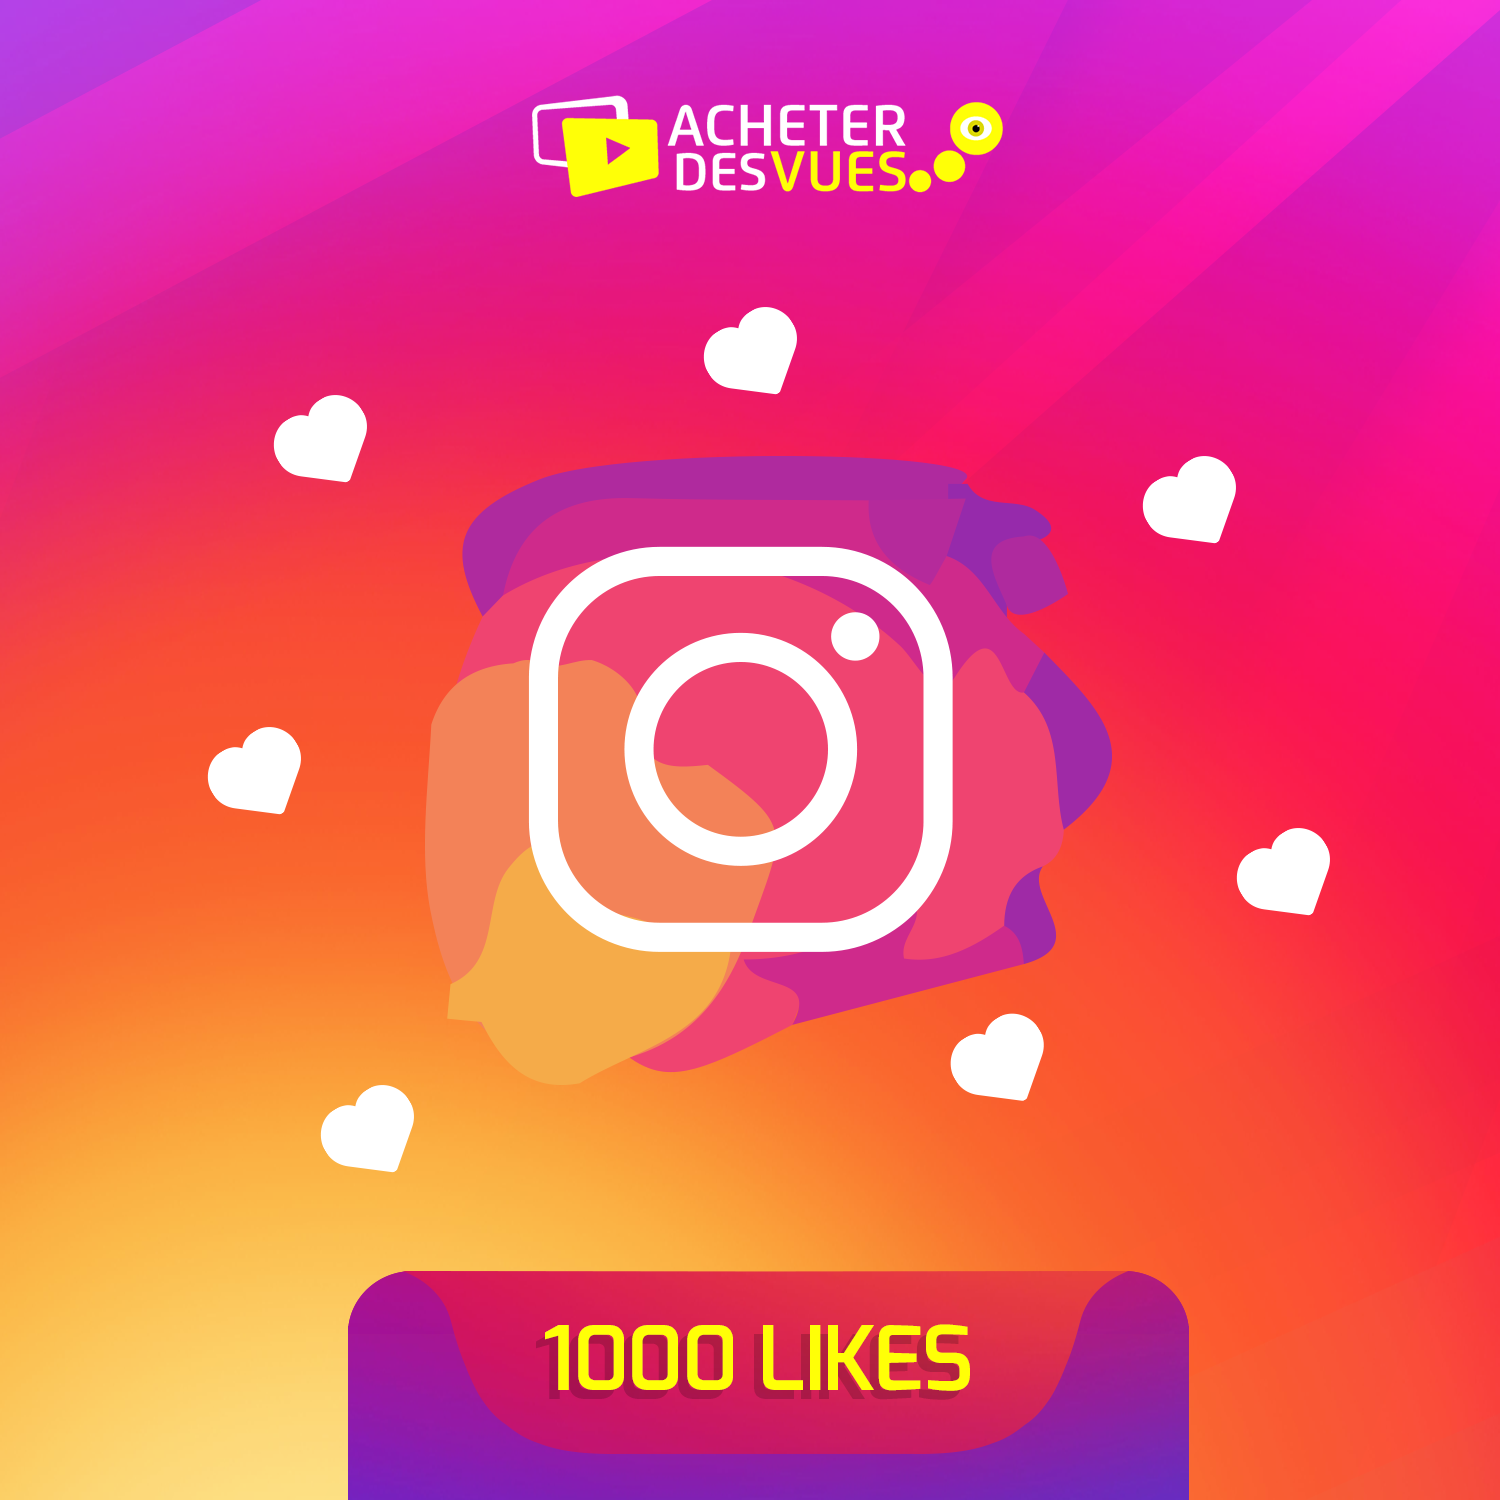 free 100 instagram likes